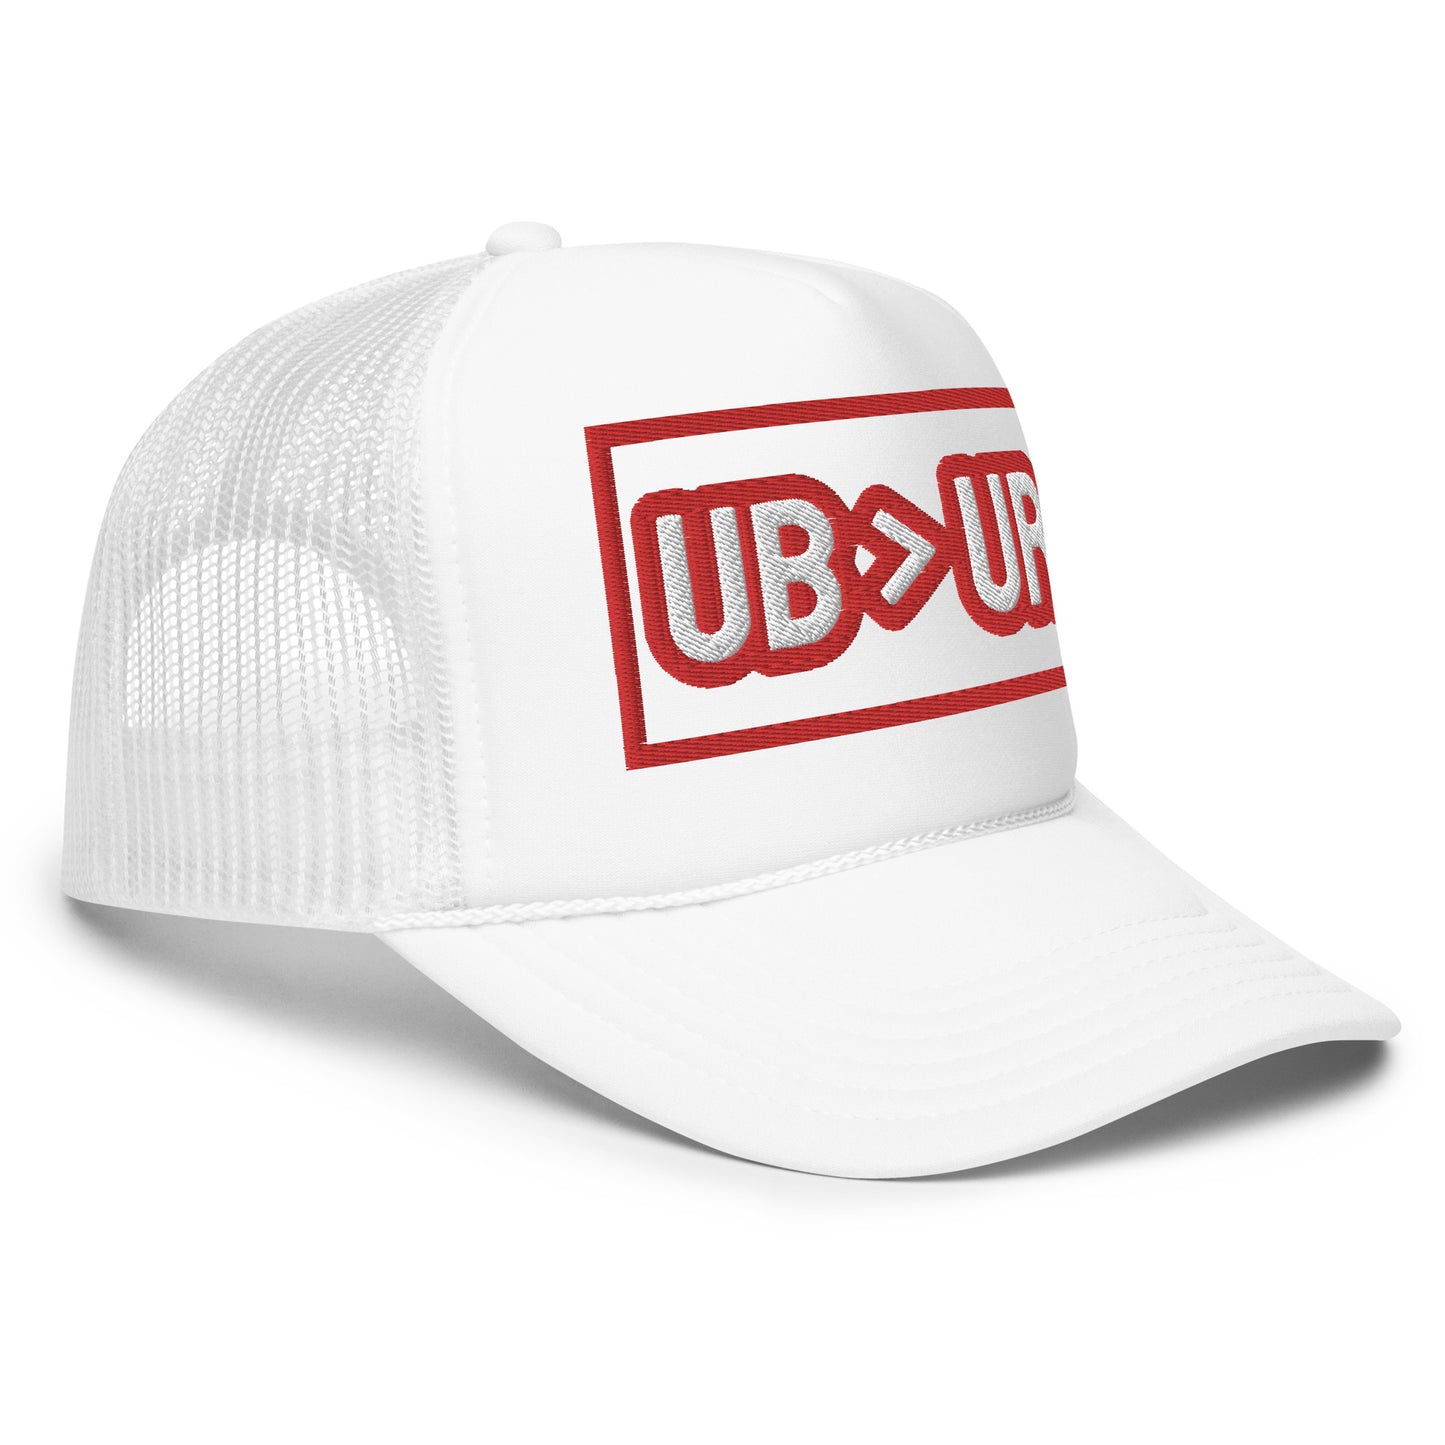 UB>UR-Foam trucker hat, white/red letters